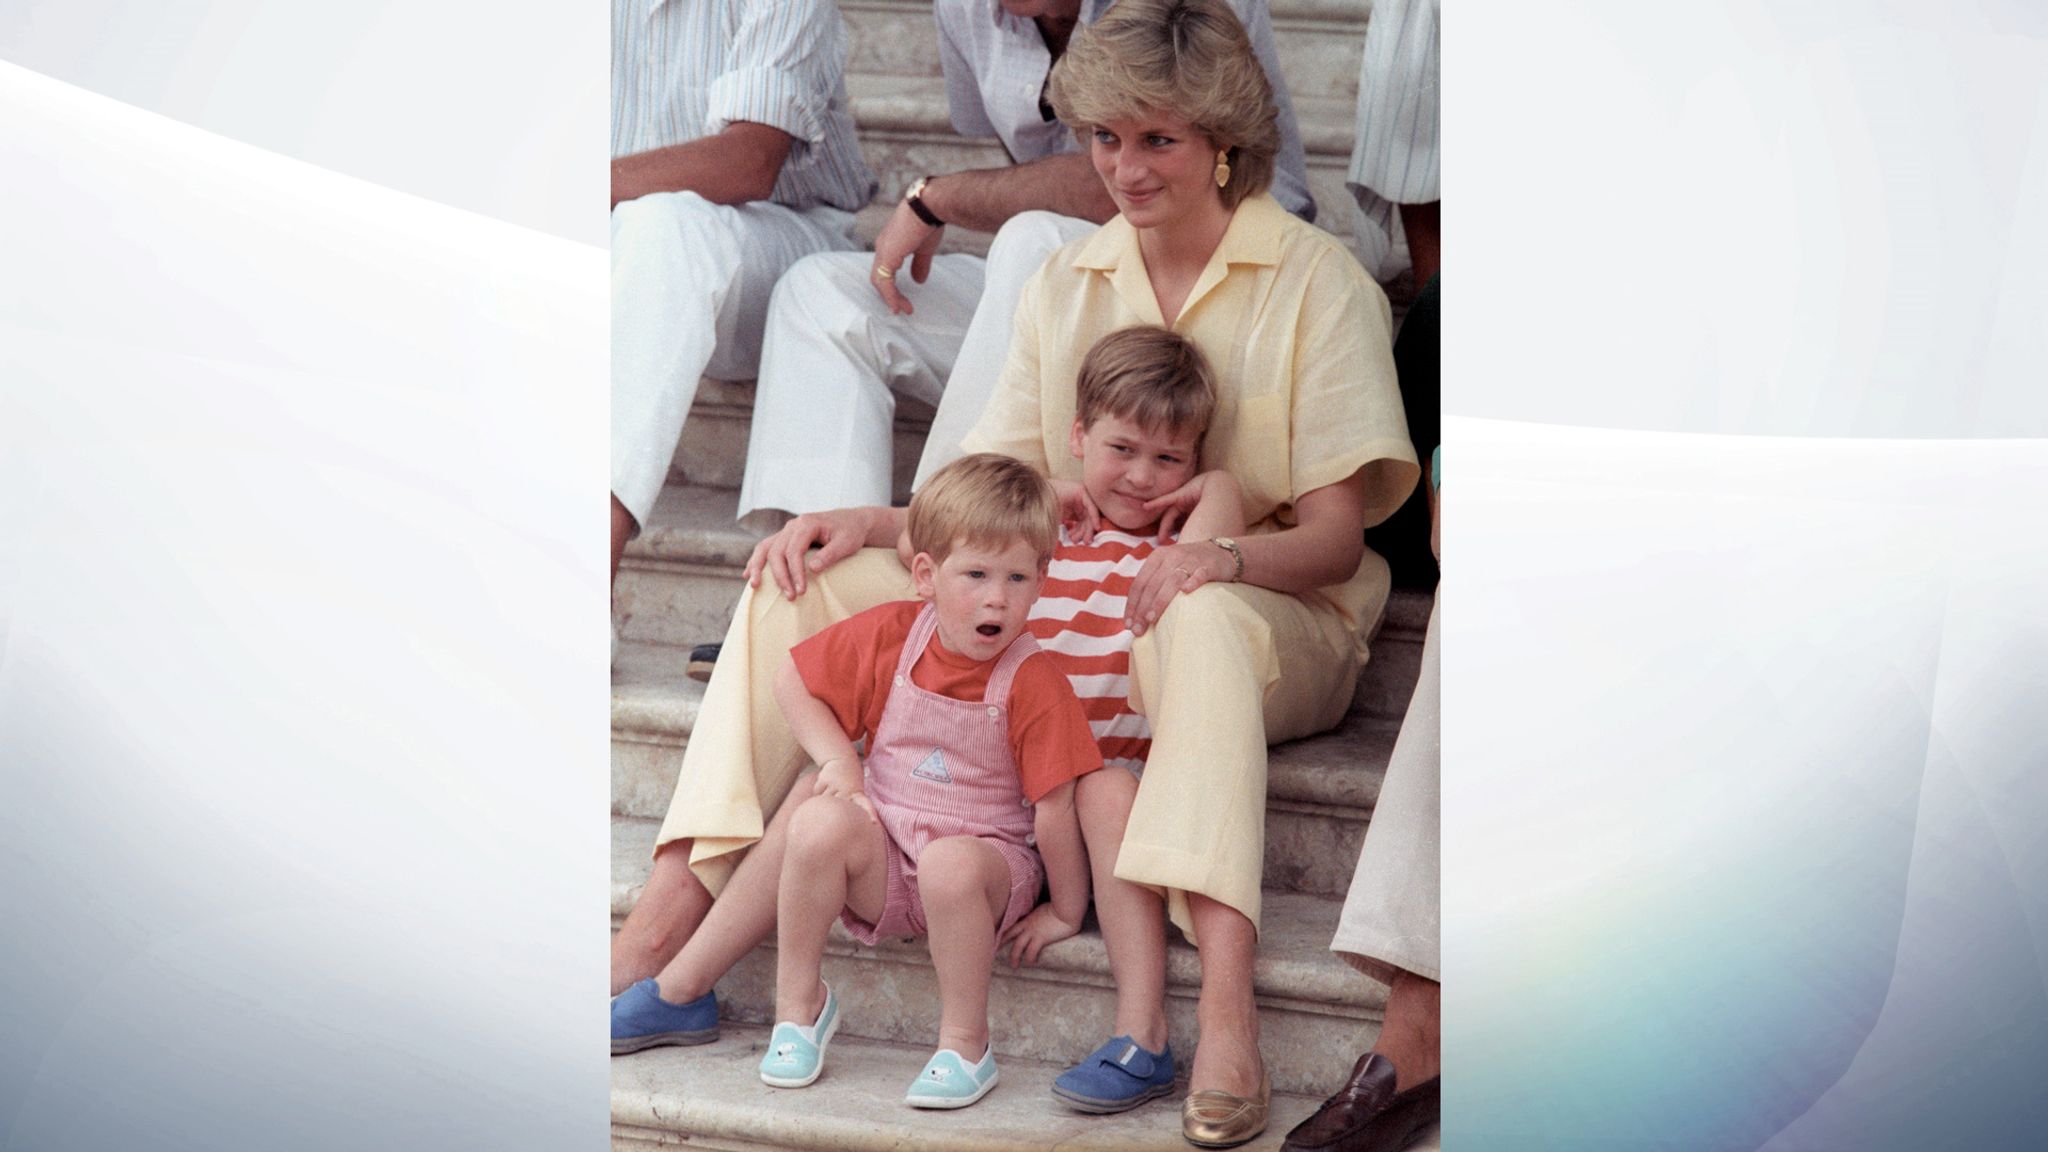 Princess Diana The Royal Death That Shocked The World Uk News Sky News